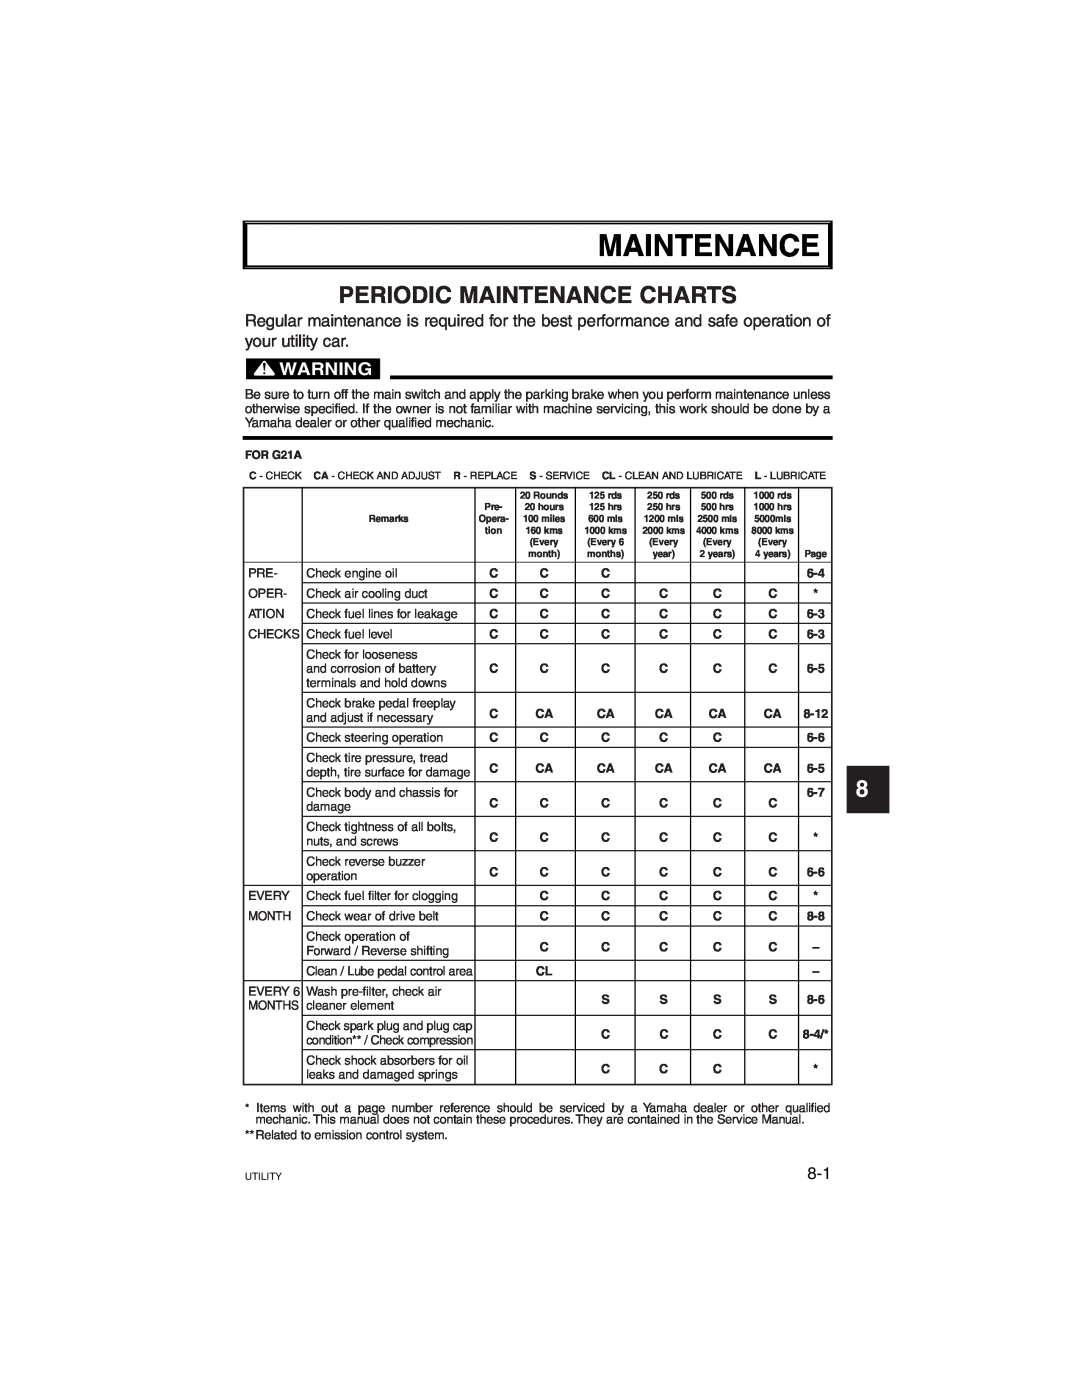 Yamaha G21A manual Periodic Maintenance Charts, 2 3 4 5 6 